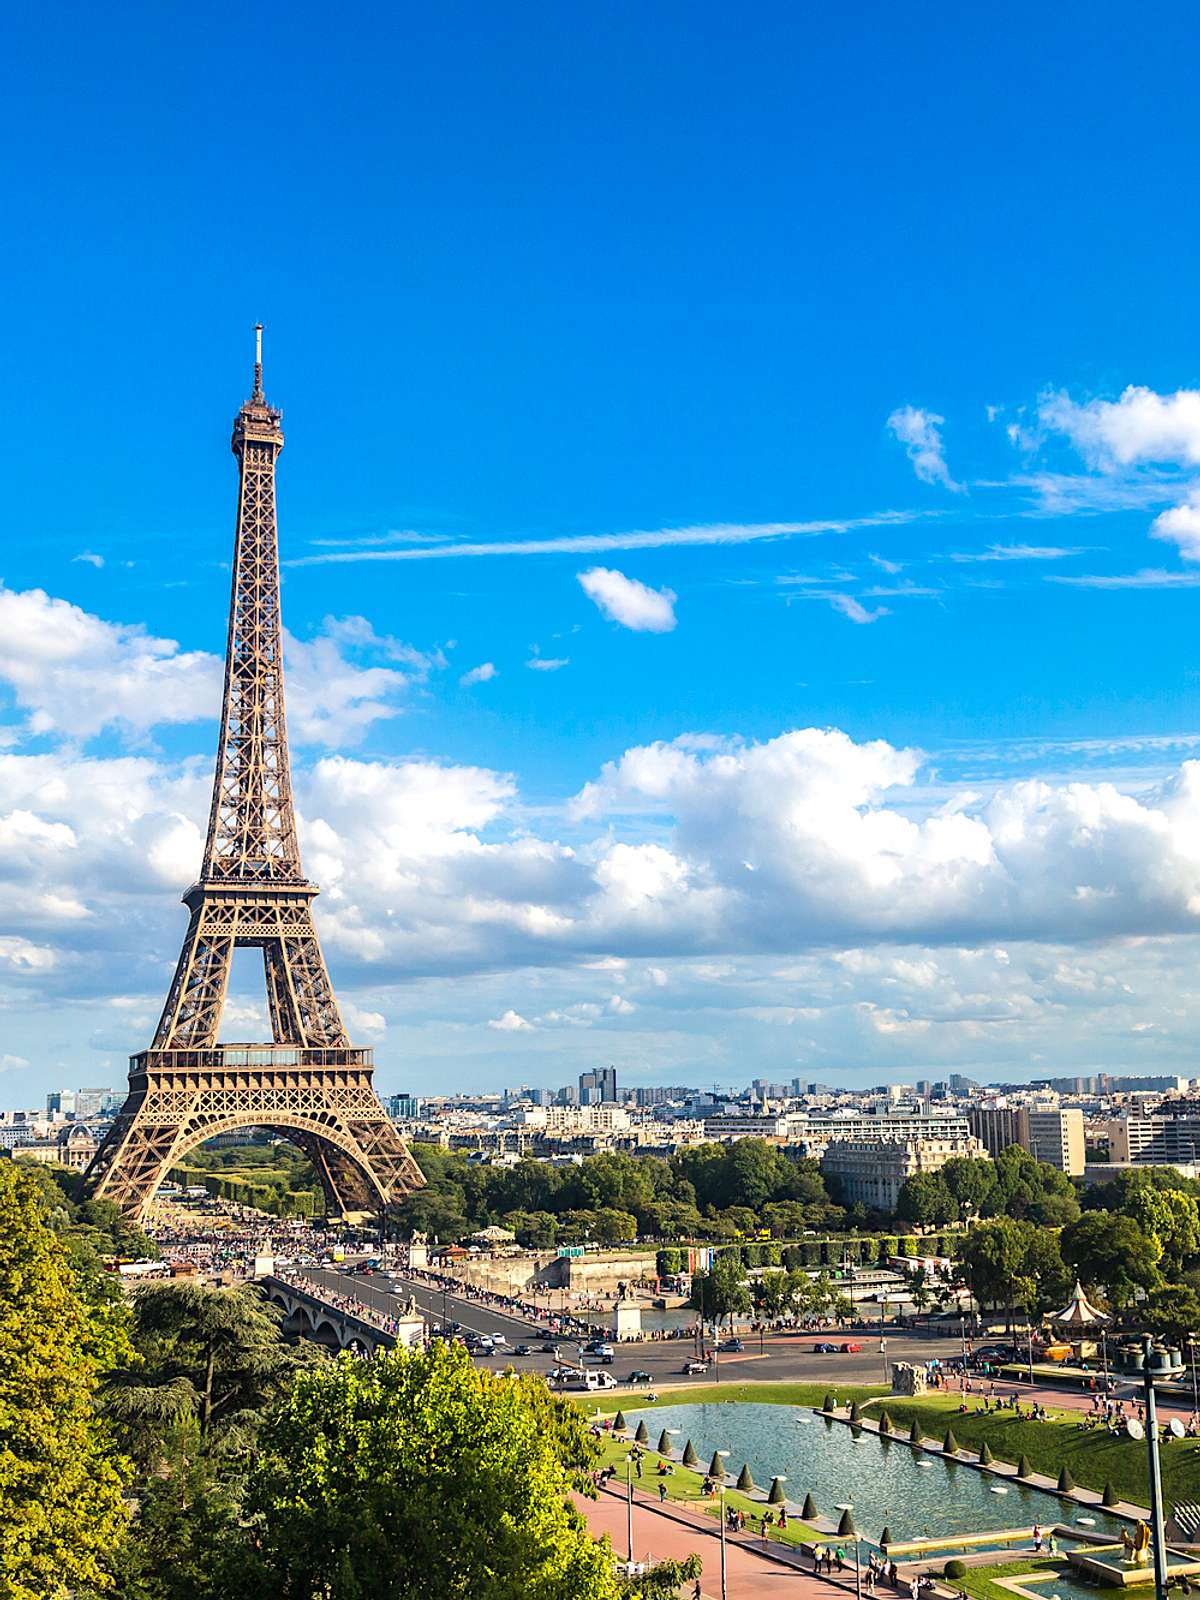 Landmark-Wrapped Facades : Louis Vuitton Eiffel Tower on 5th Avenue